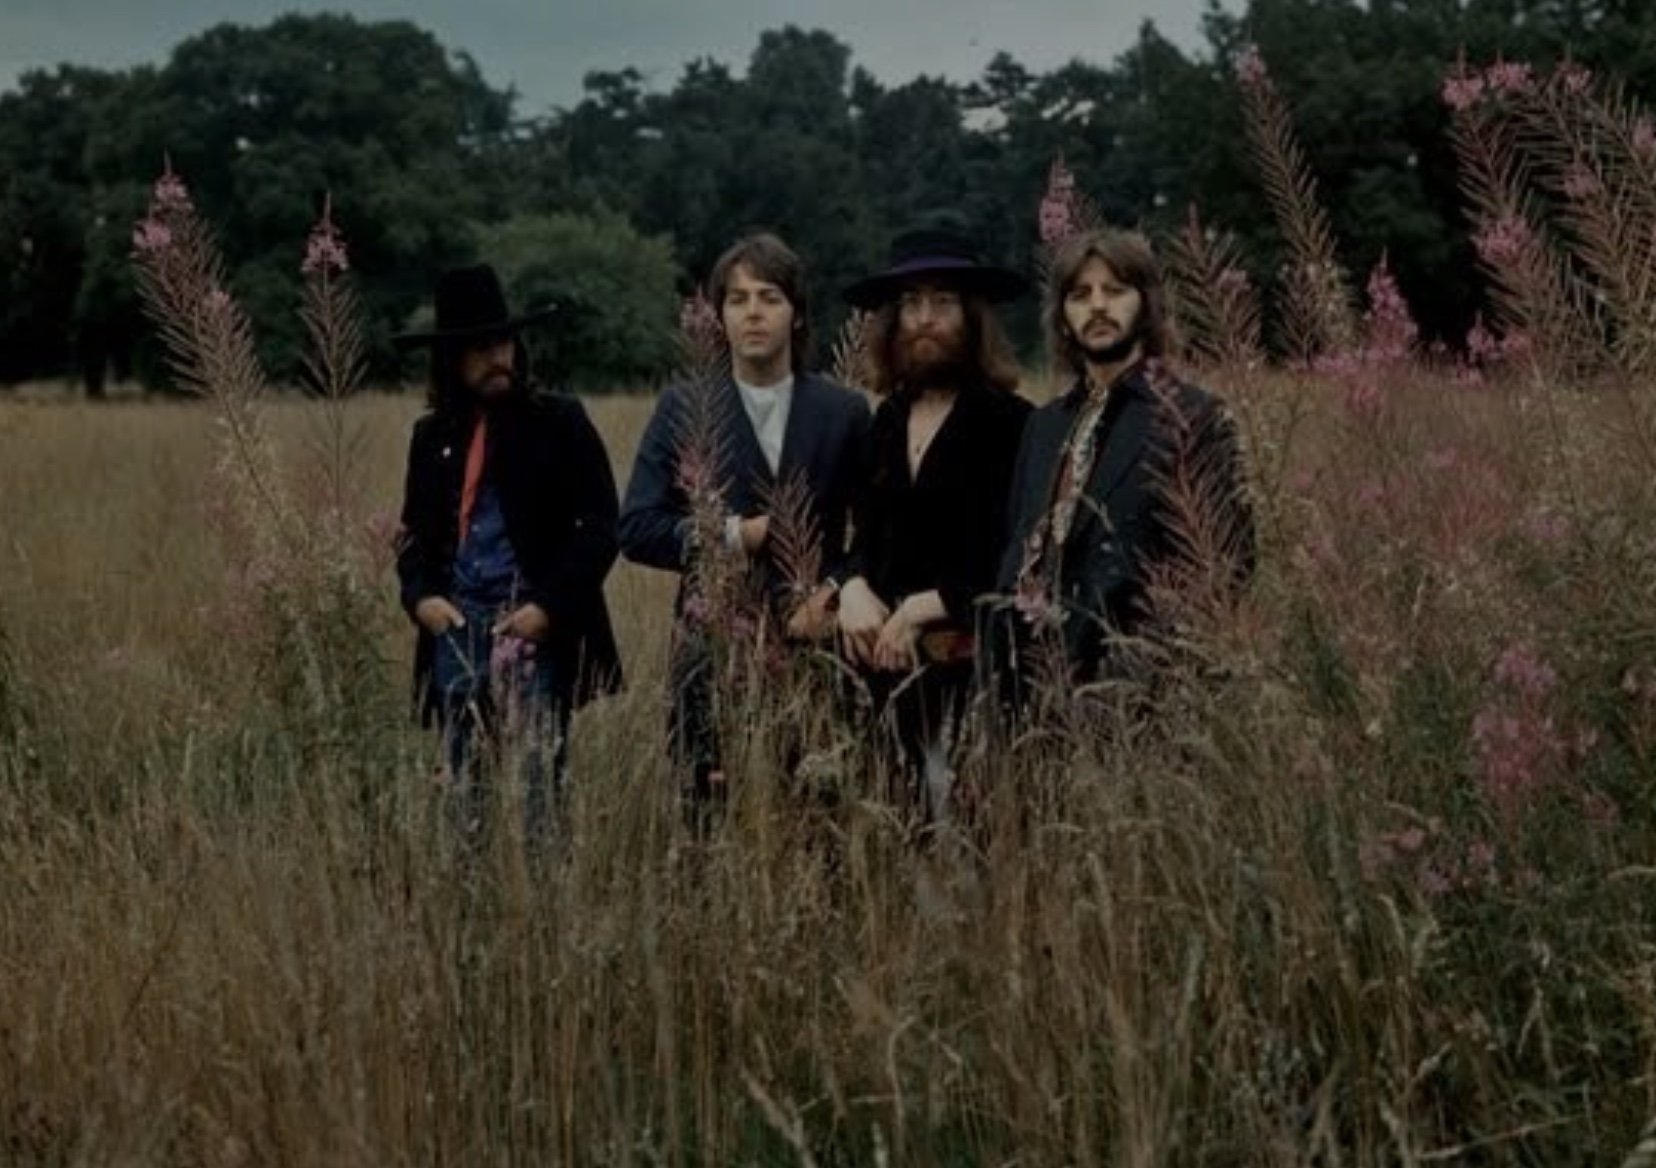 Beatles in grasslands.jpeg